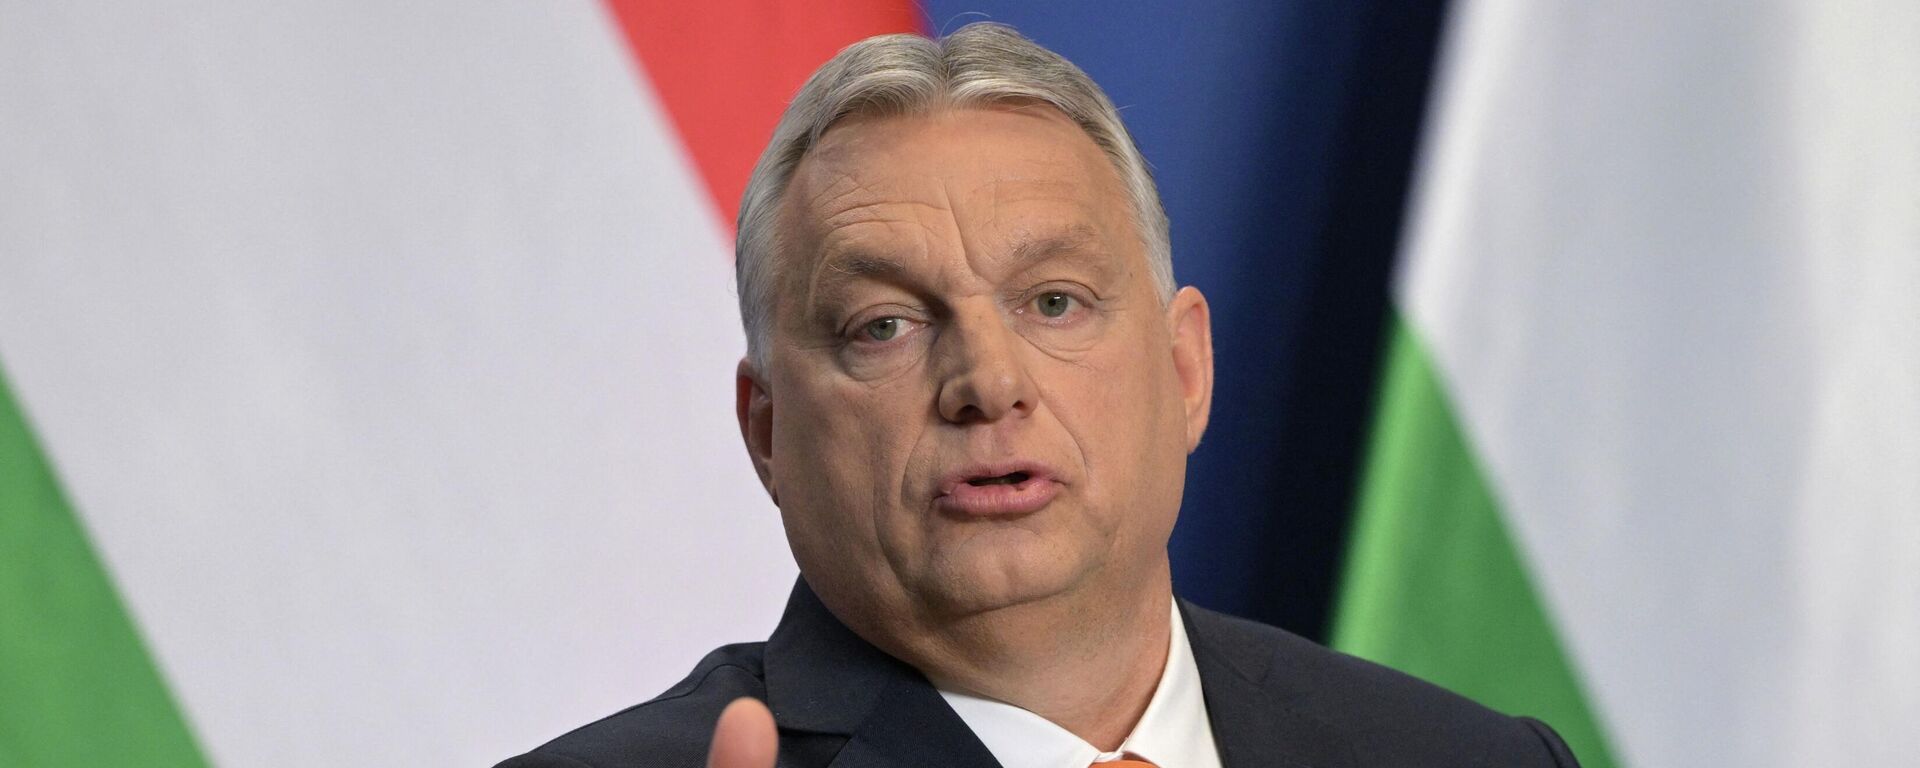 Viktor Orbán, el primer ministro de Hungría - Sputnik Mundo, 1920, 05.05.2022